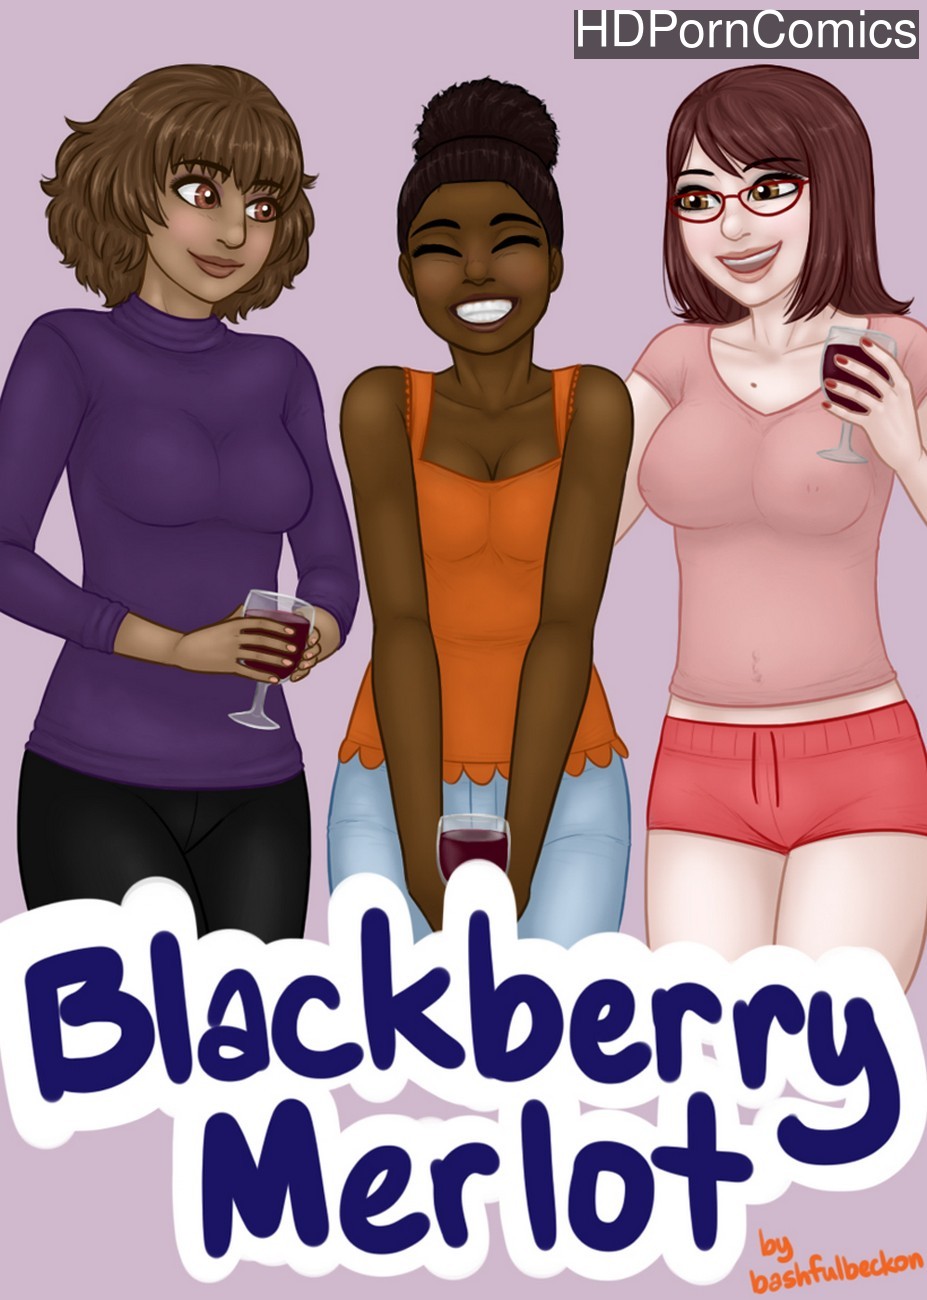 Blackberry Hd Video Sexy Com - Blackberry Merlot comic porn - HD Porn Comics